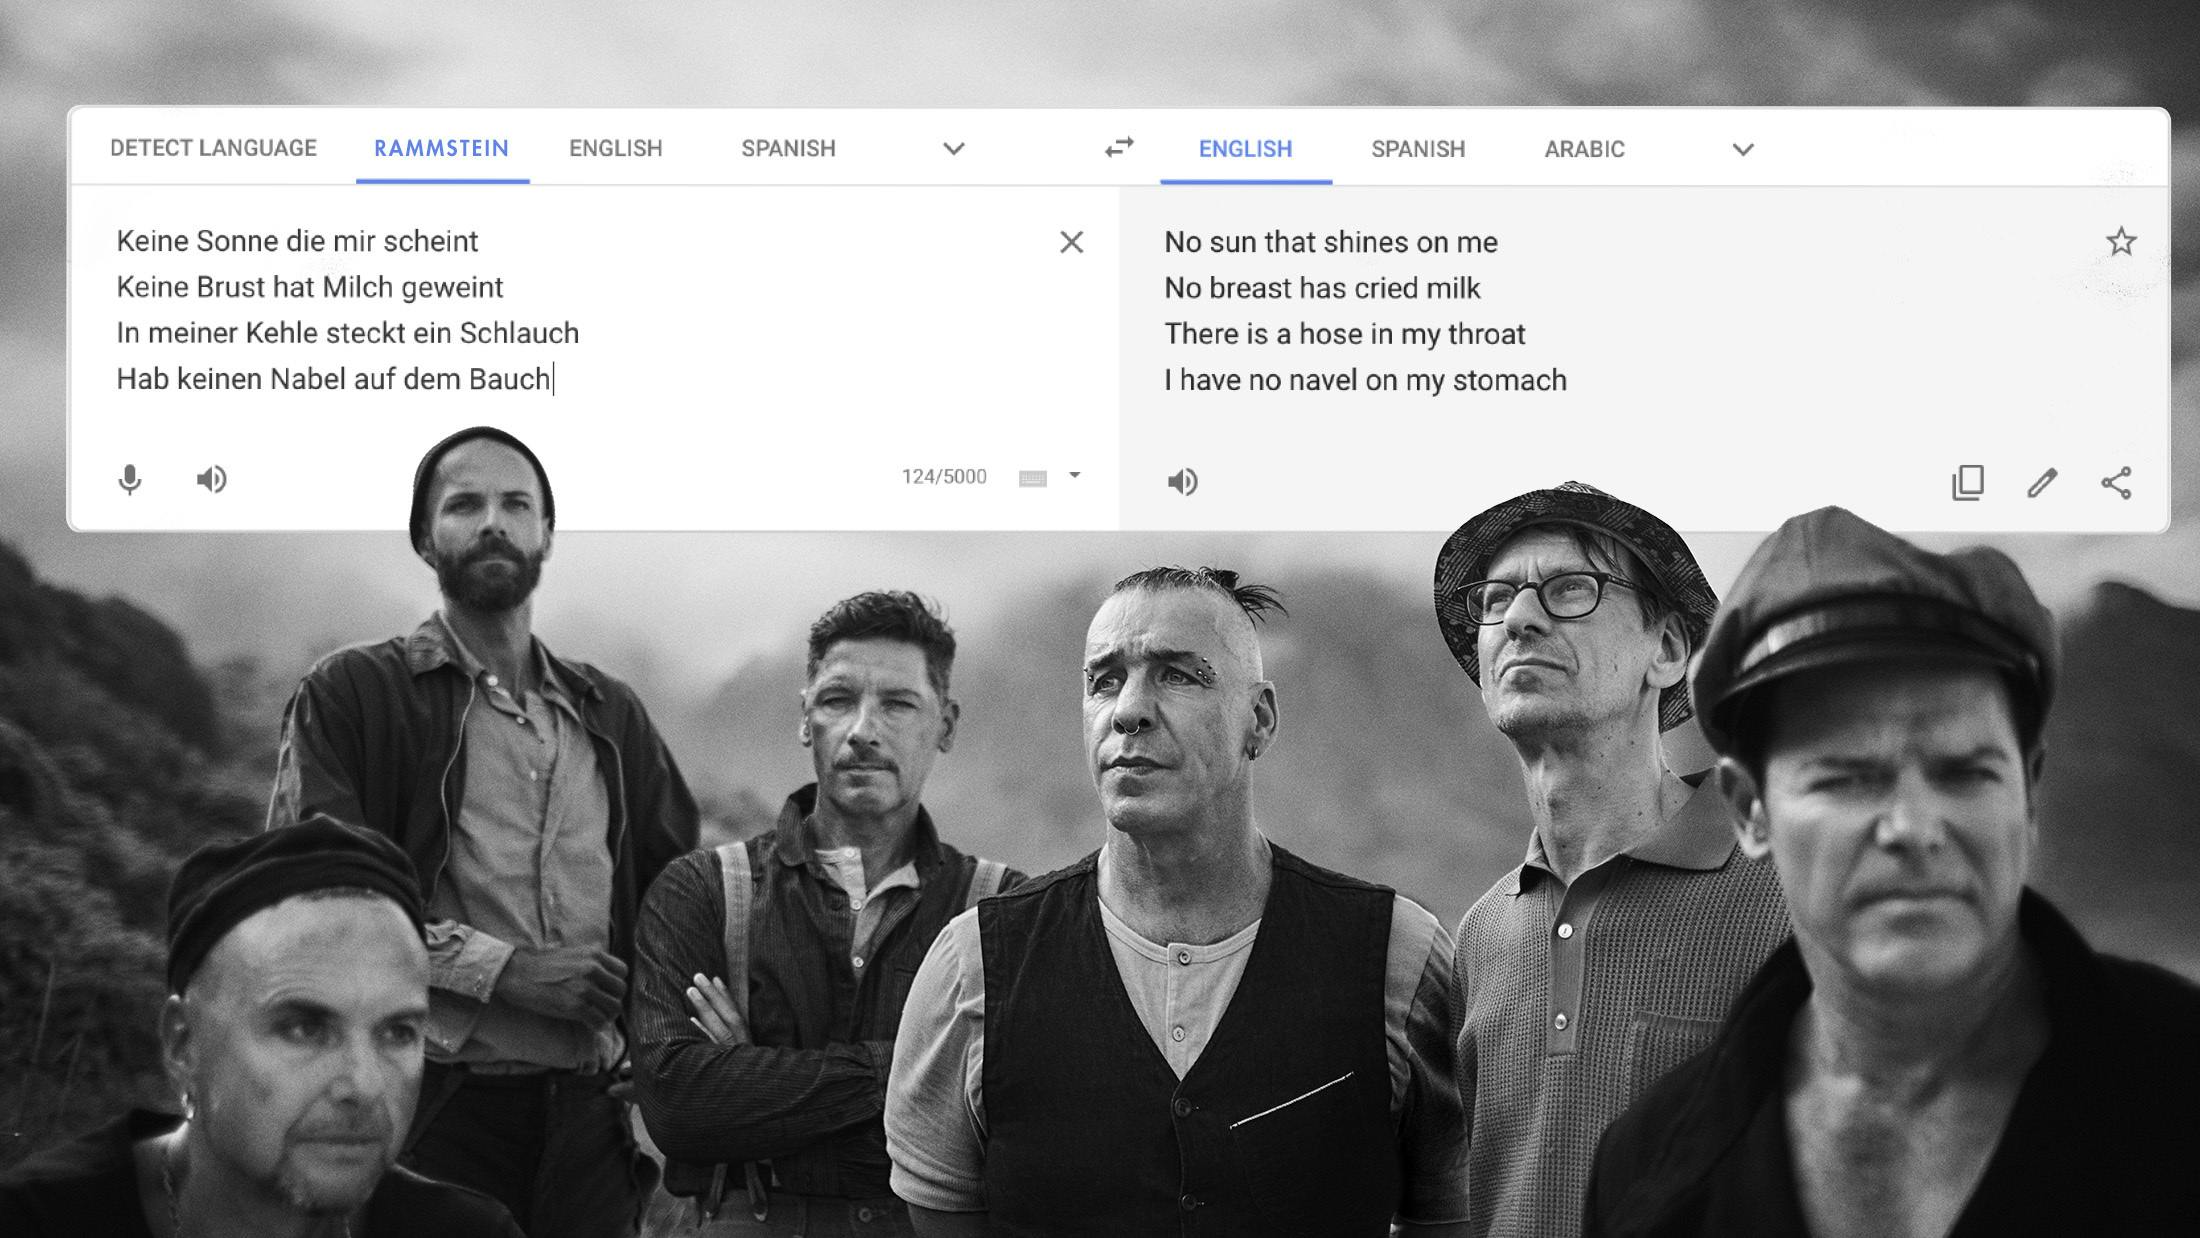 Rammstein's Most Bizarre Lyrics (When Put Through Google Translate)